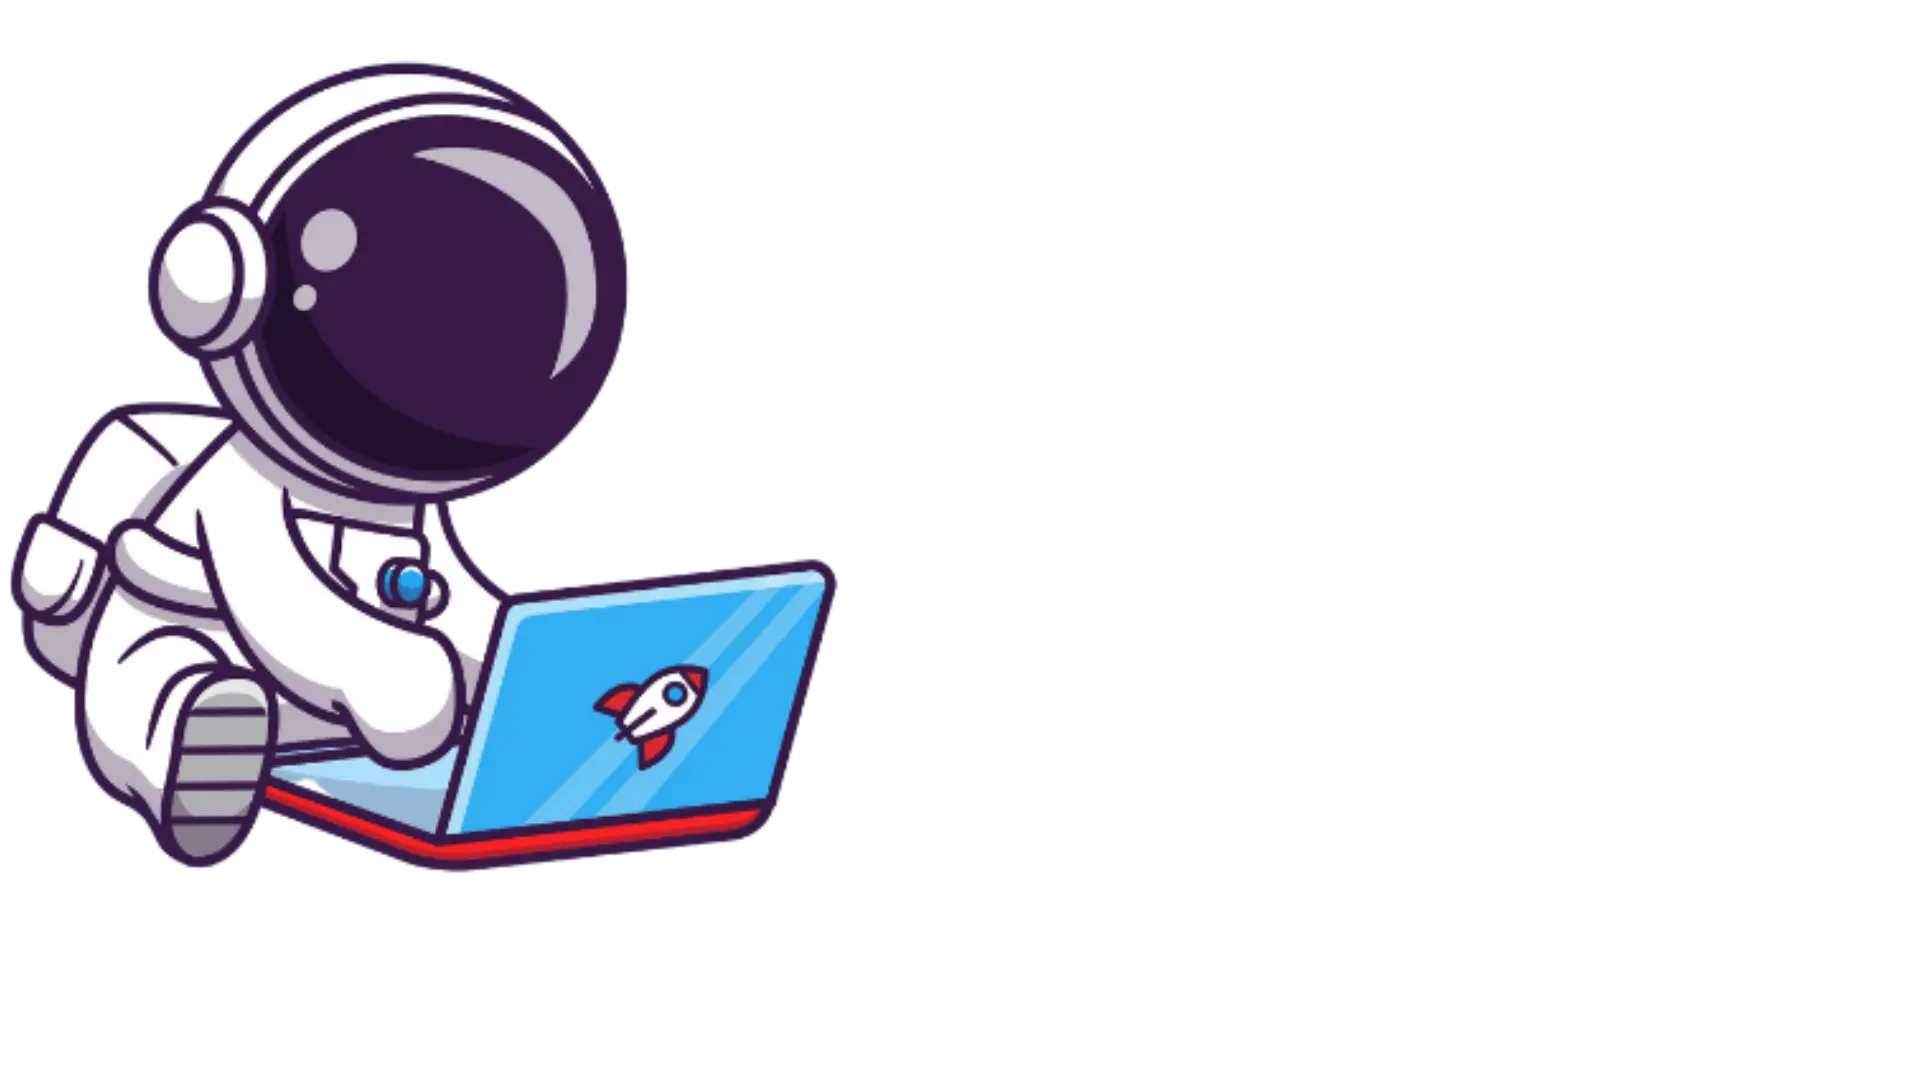 webspaces-logo-texte